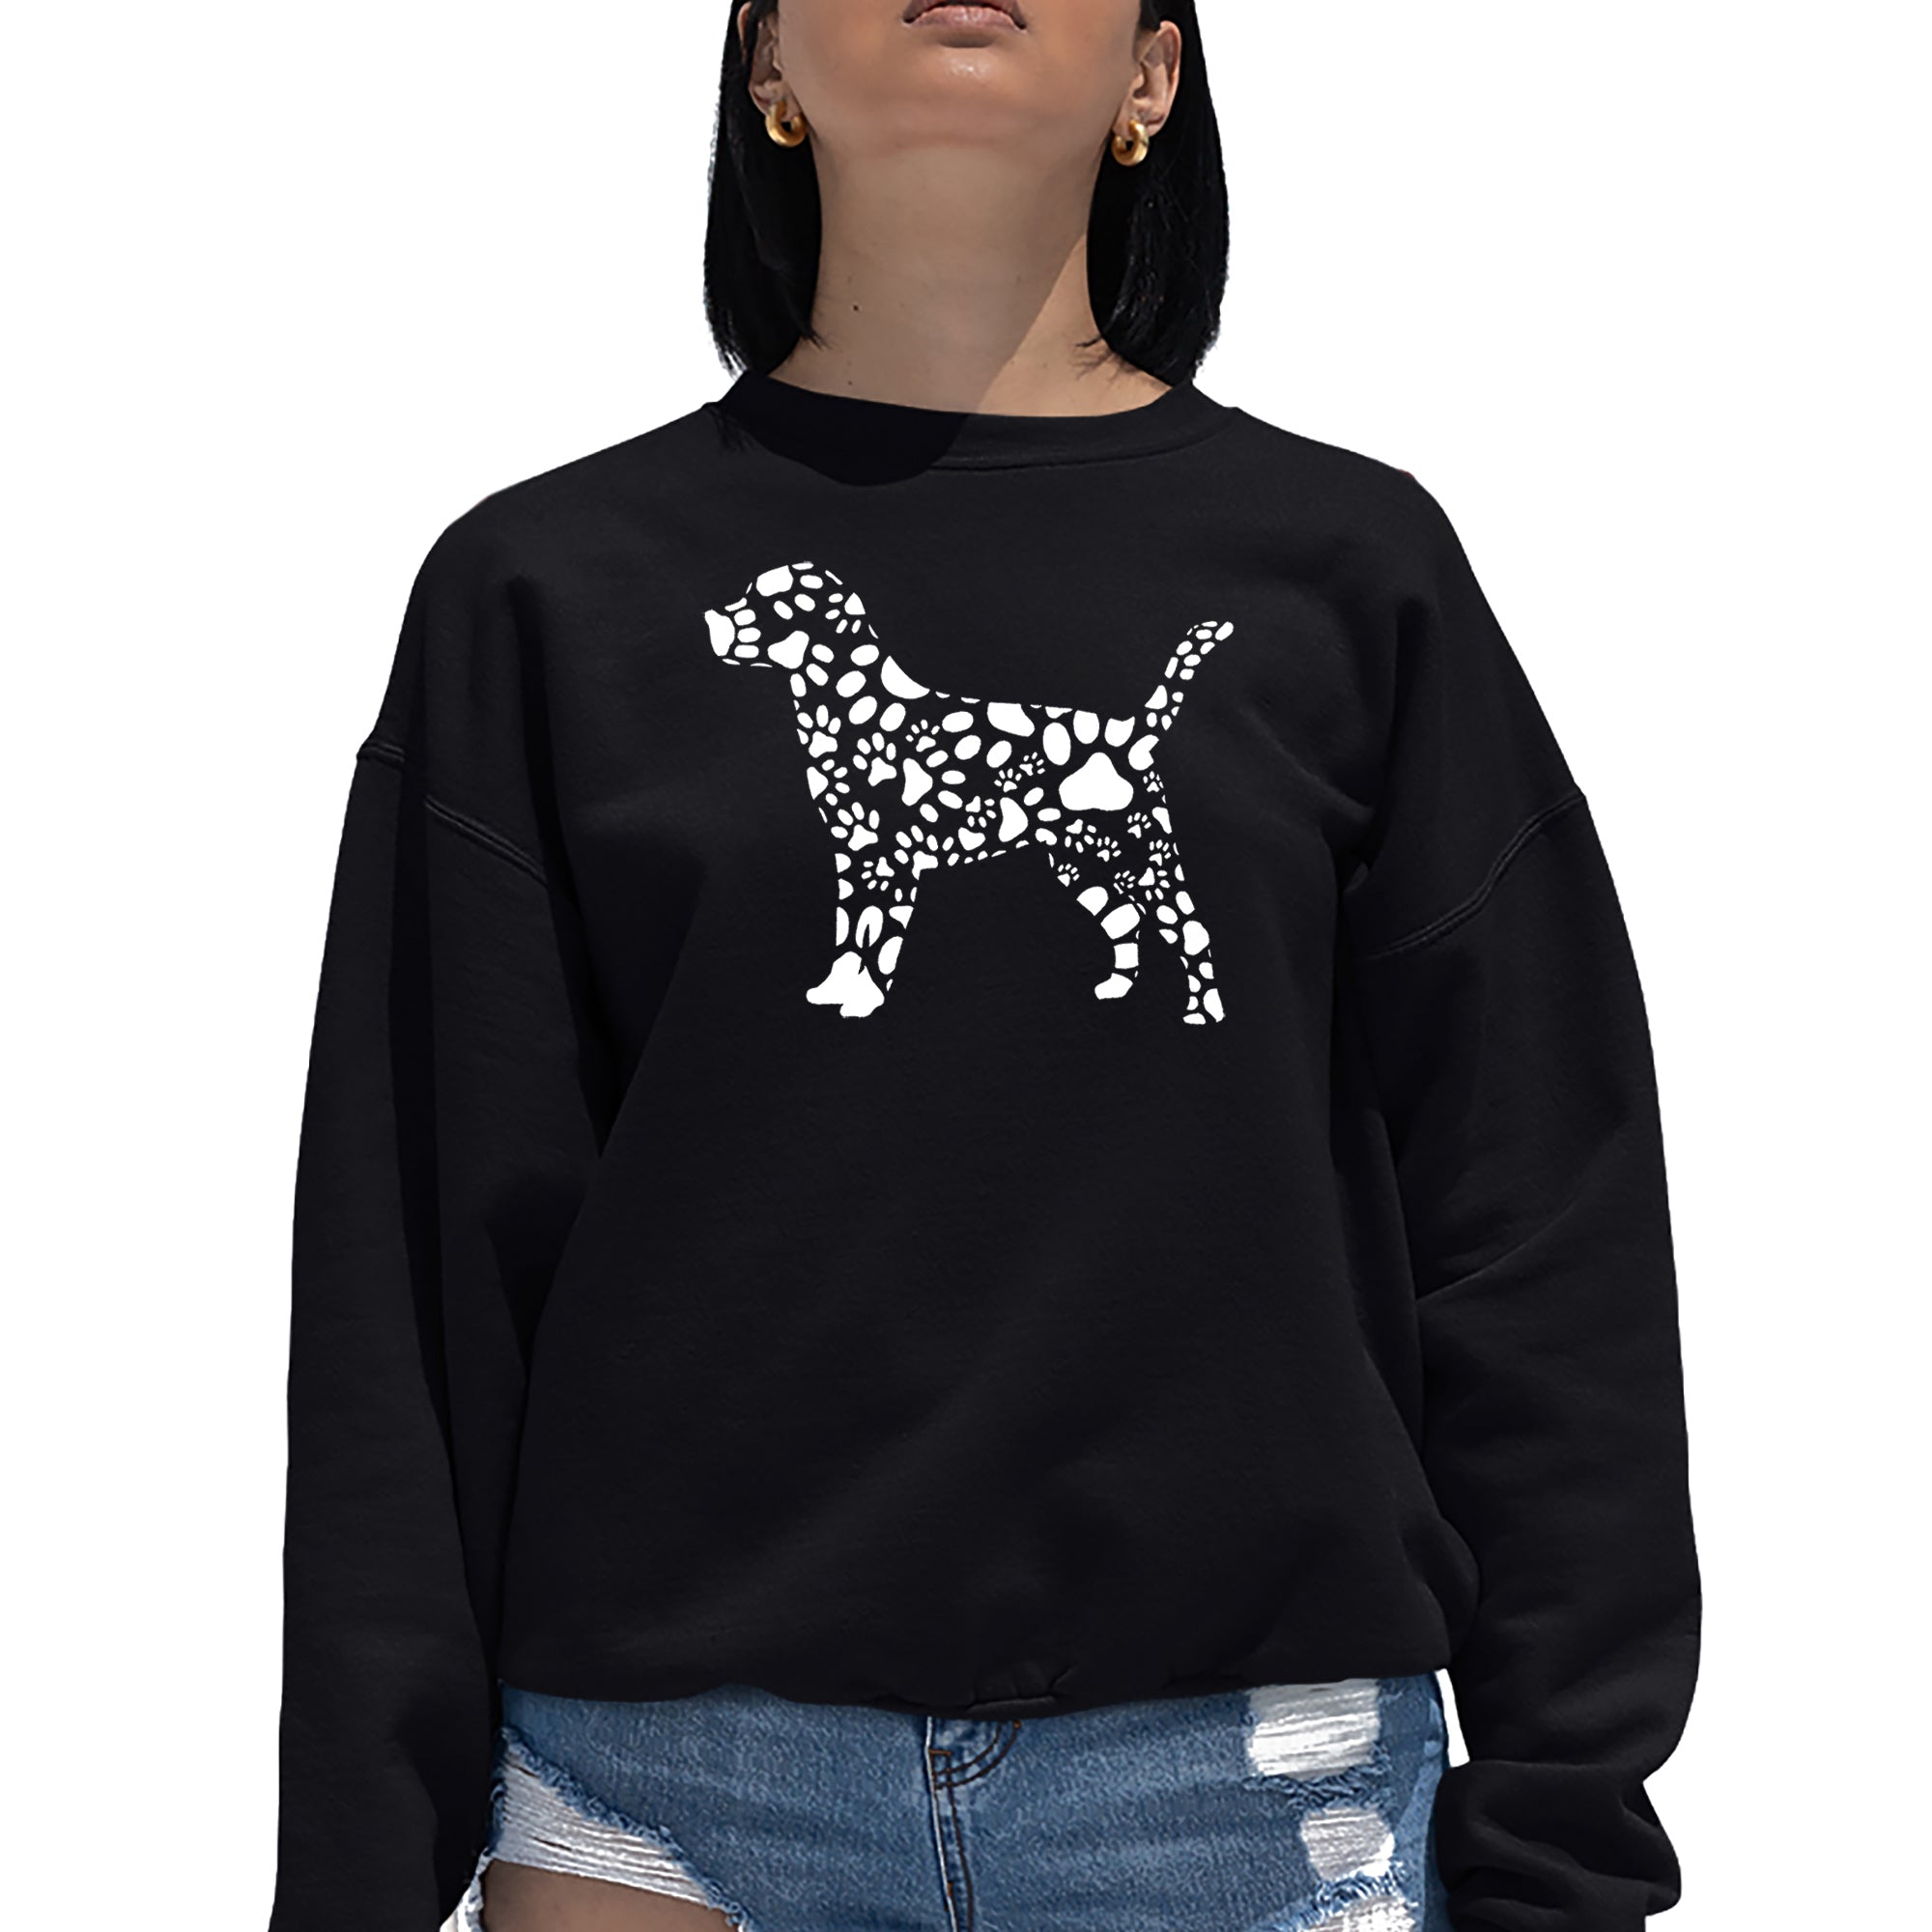 Dog Paw Prints - Women's Word Art Crewneck Sweatshirt - Black - Large